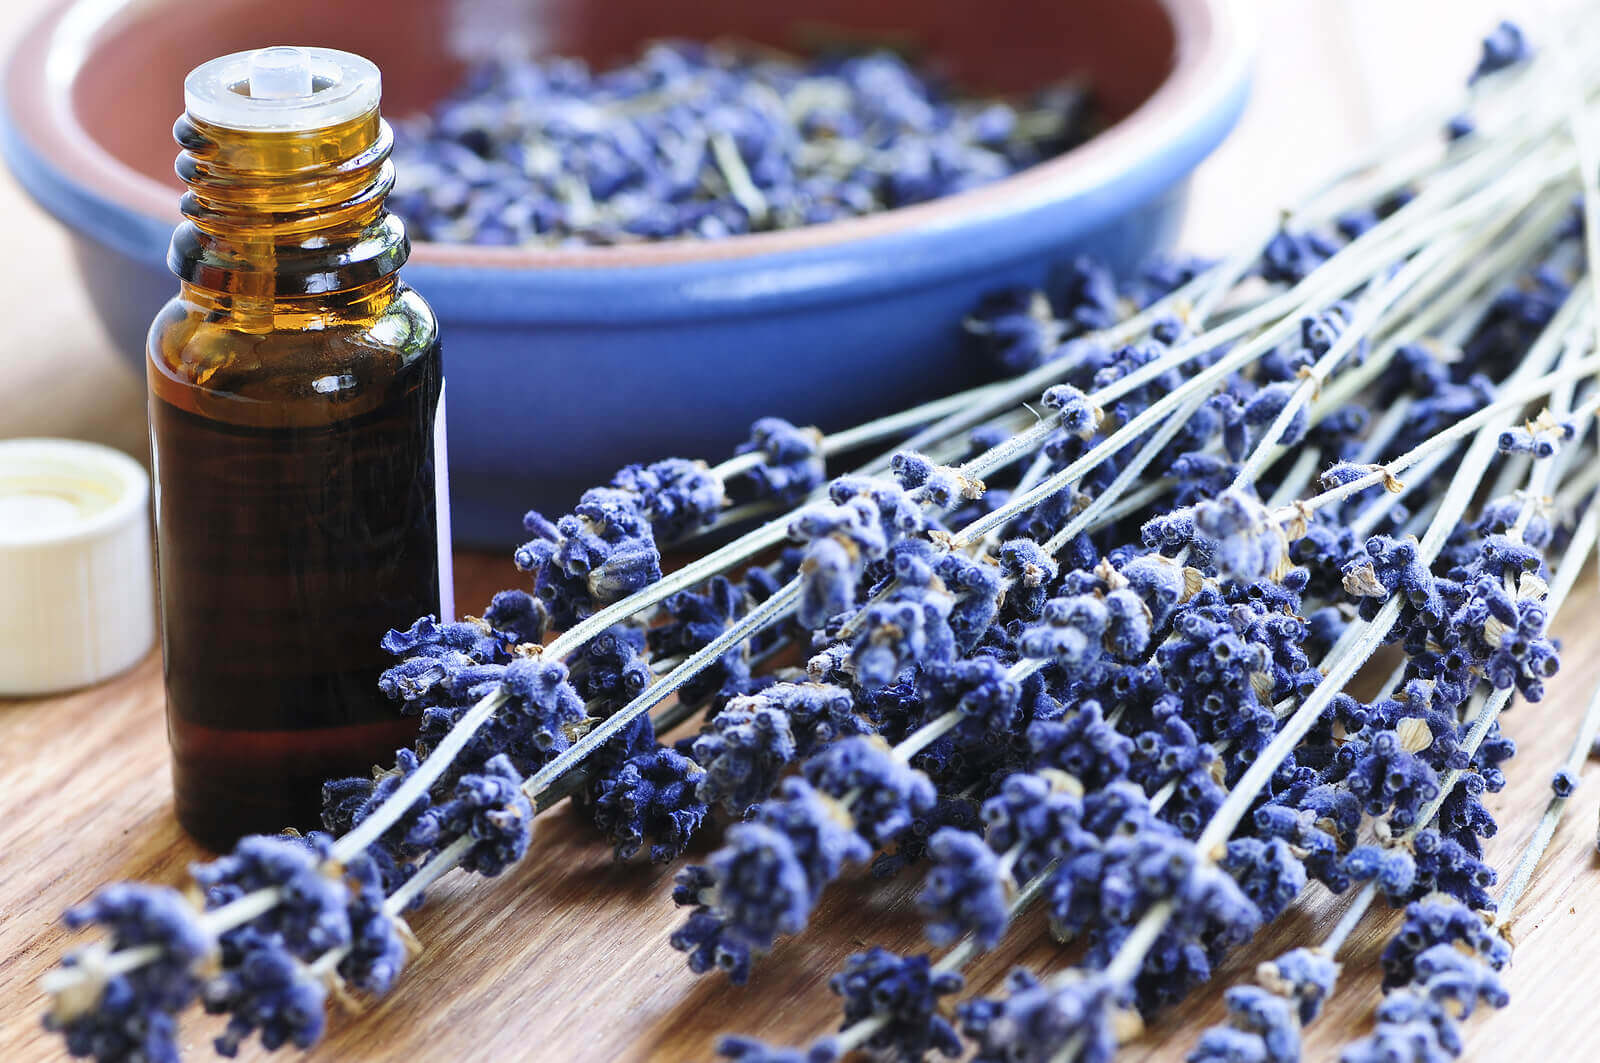 Lavender stems and lavender oil.